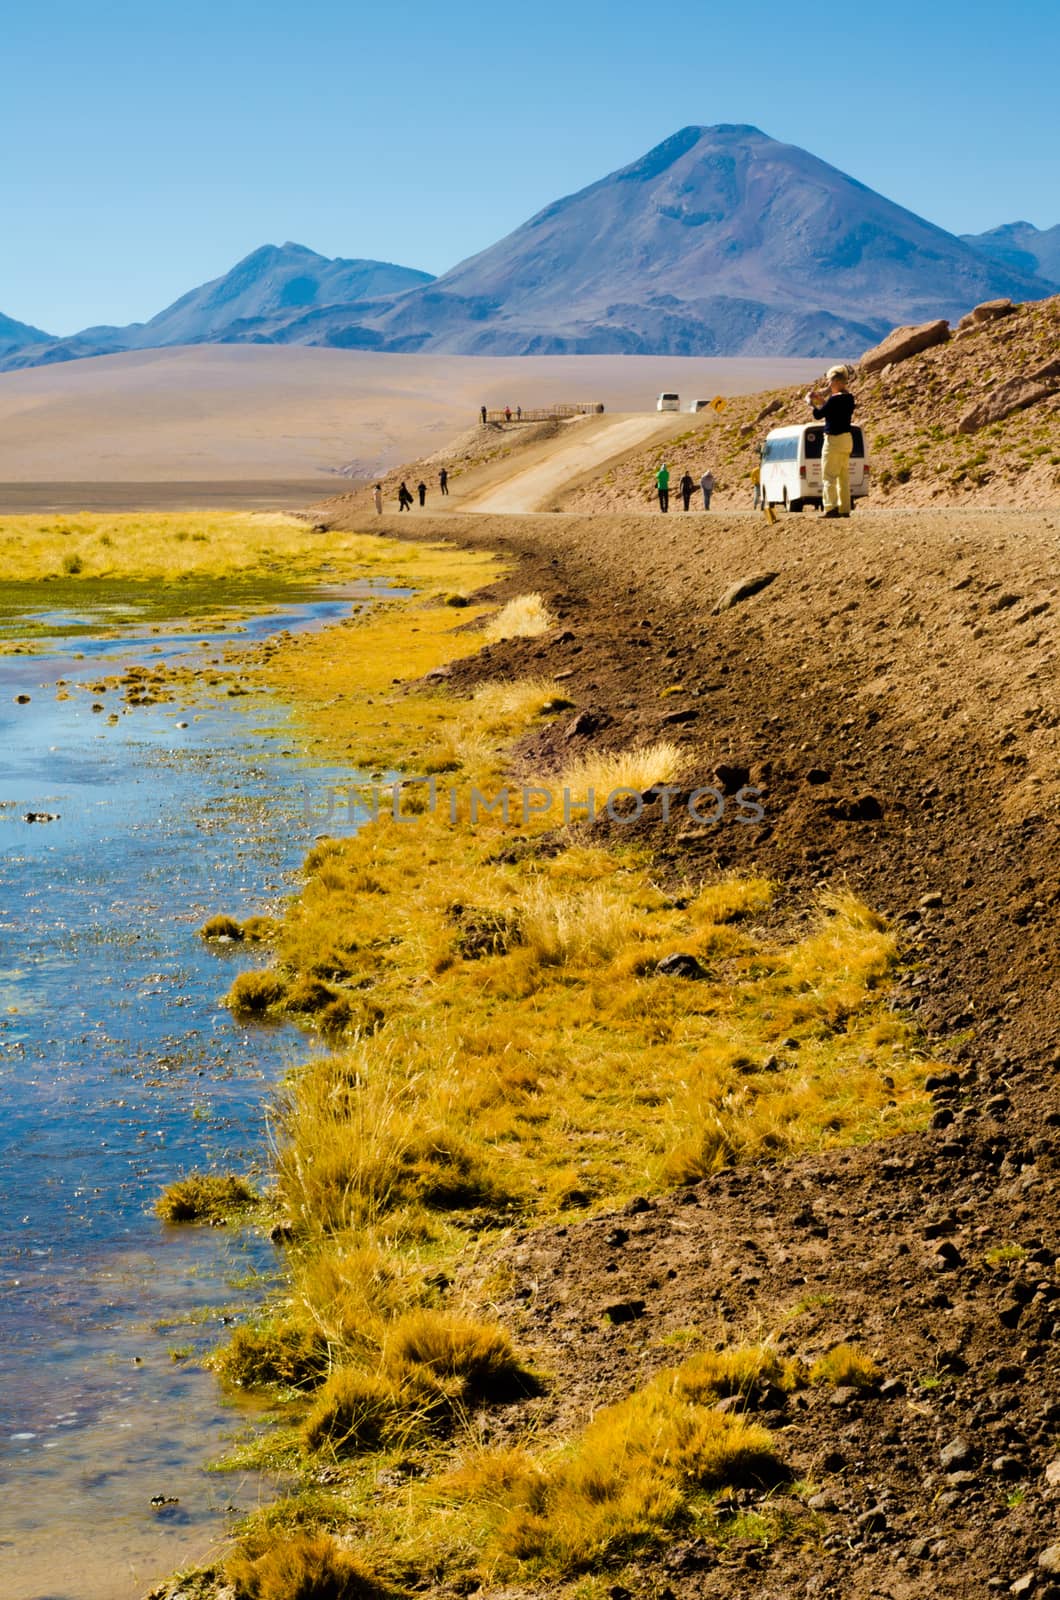 Grass at the edge of a natural lake near the Atacama desert, Chile